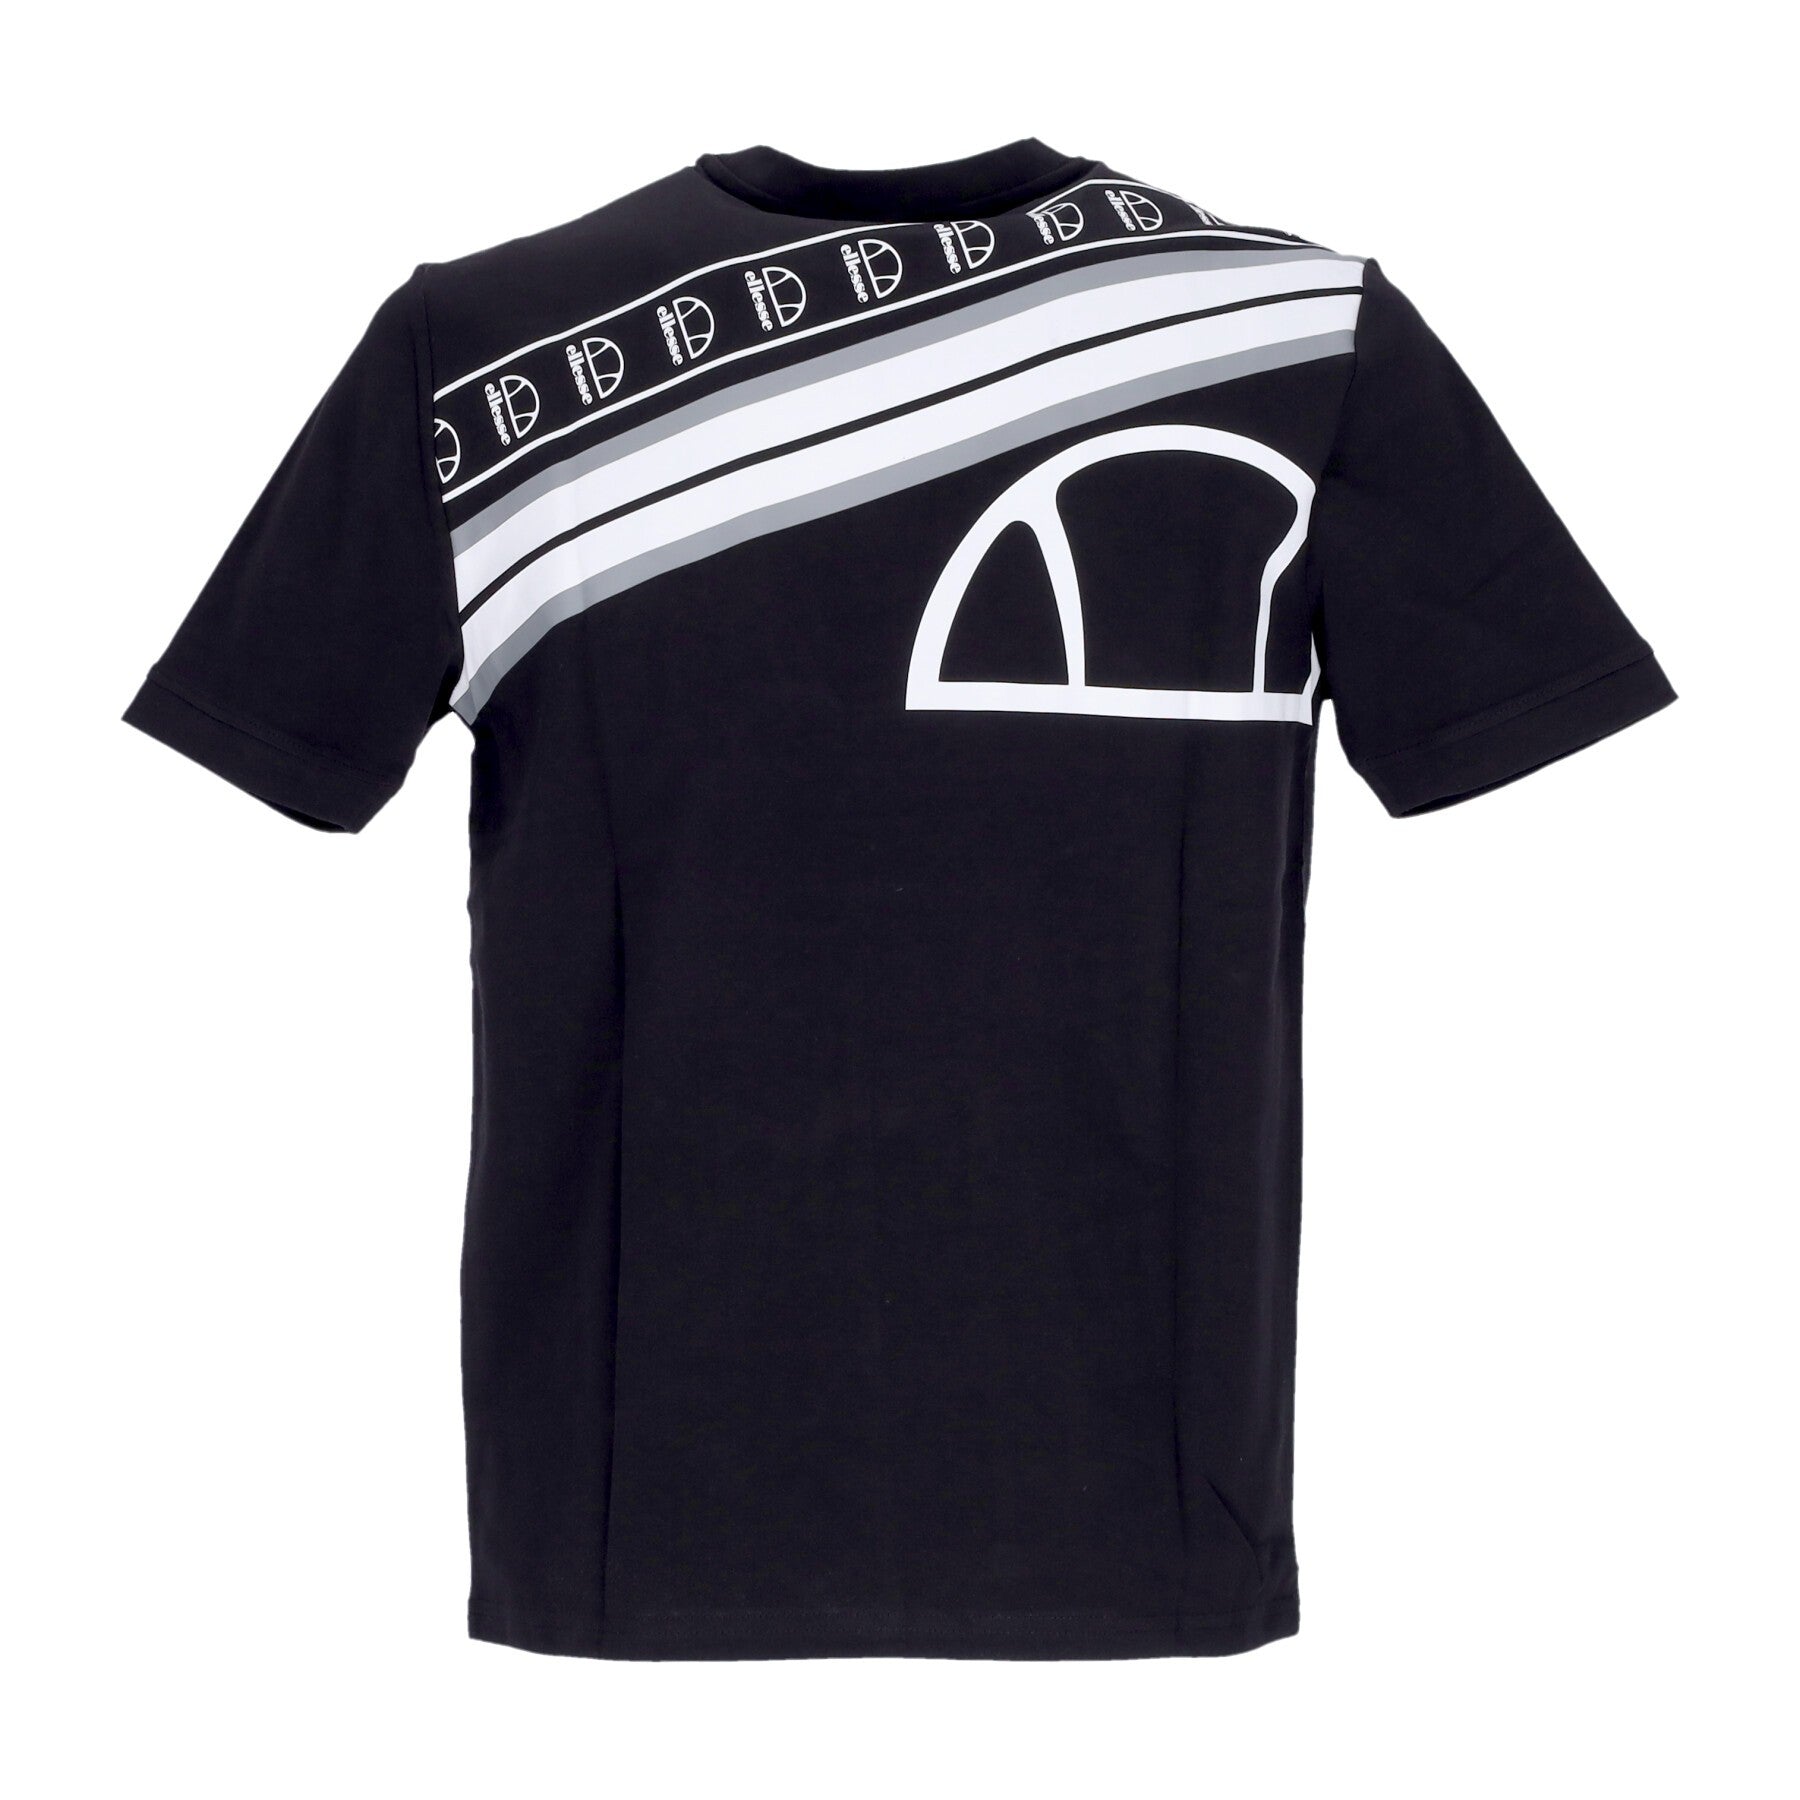 Men's Tee Black T-Shirt